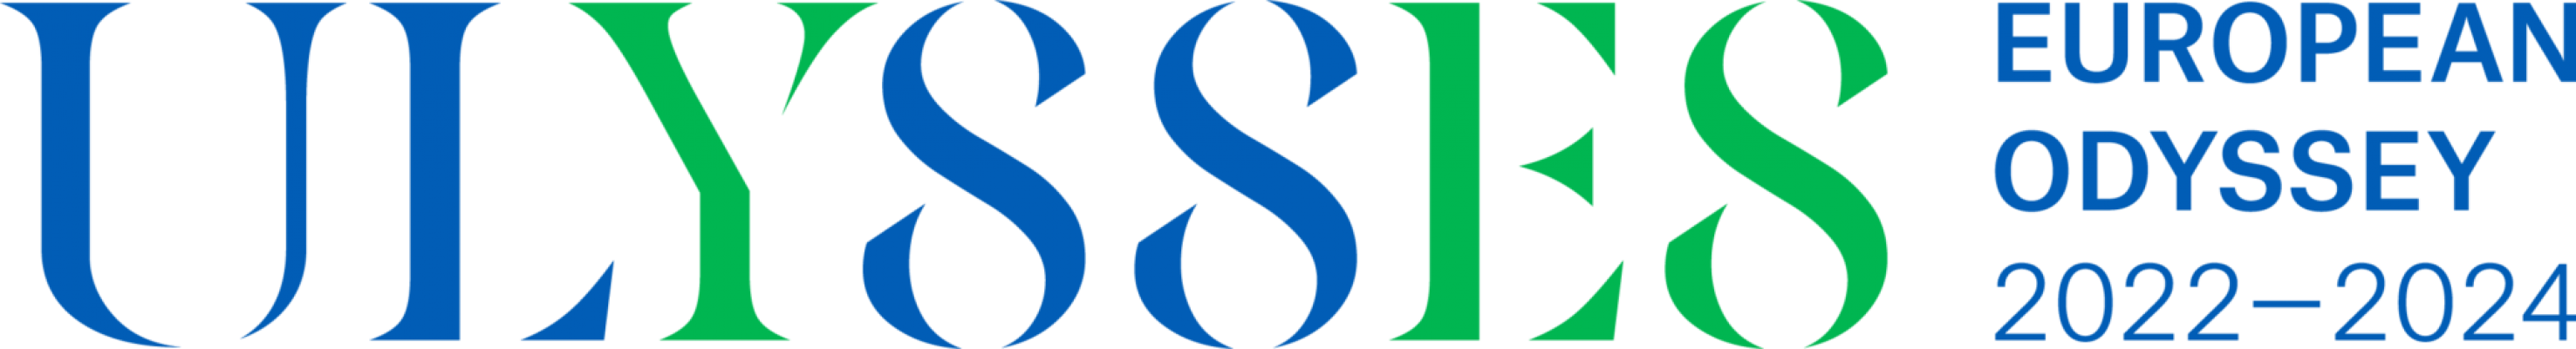 Ulysses_logo_horizontal_blue-green-1920x260